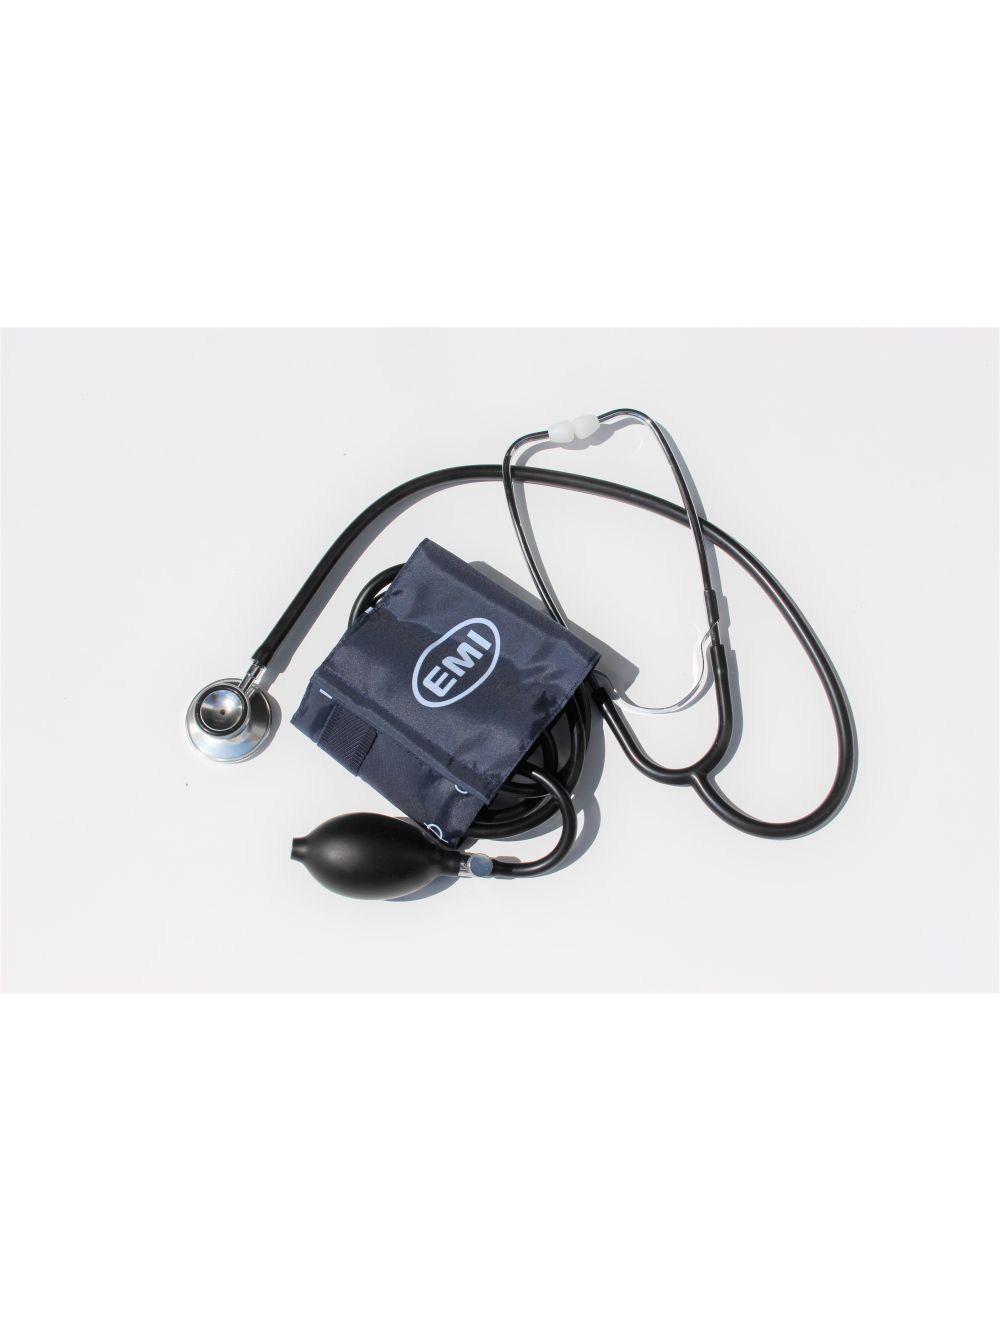 Procuff Sphygmomanometer/Dual Head Stethoscope